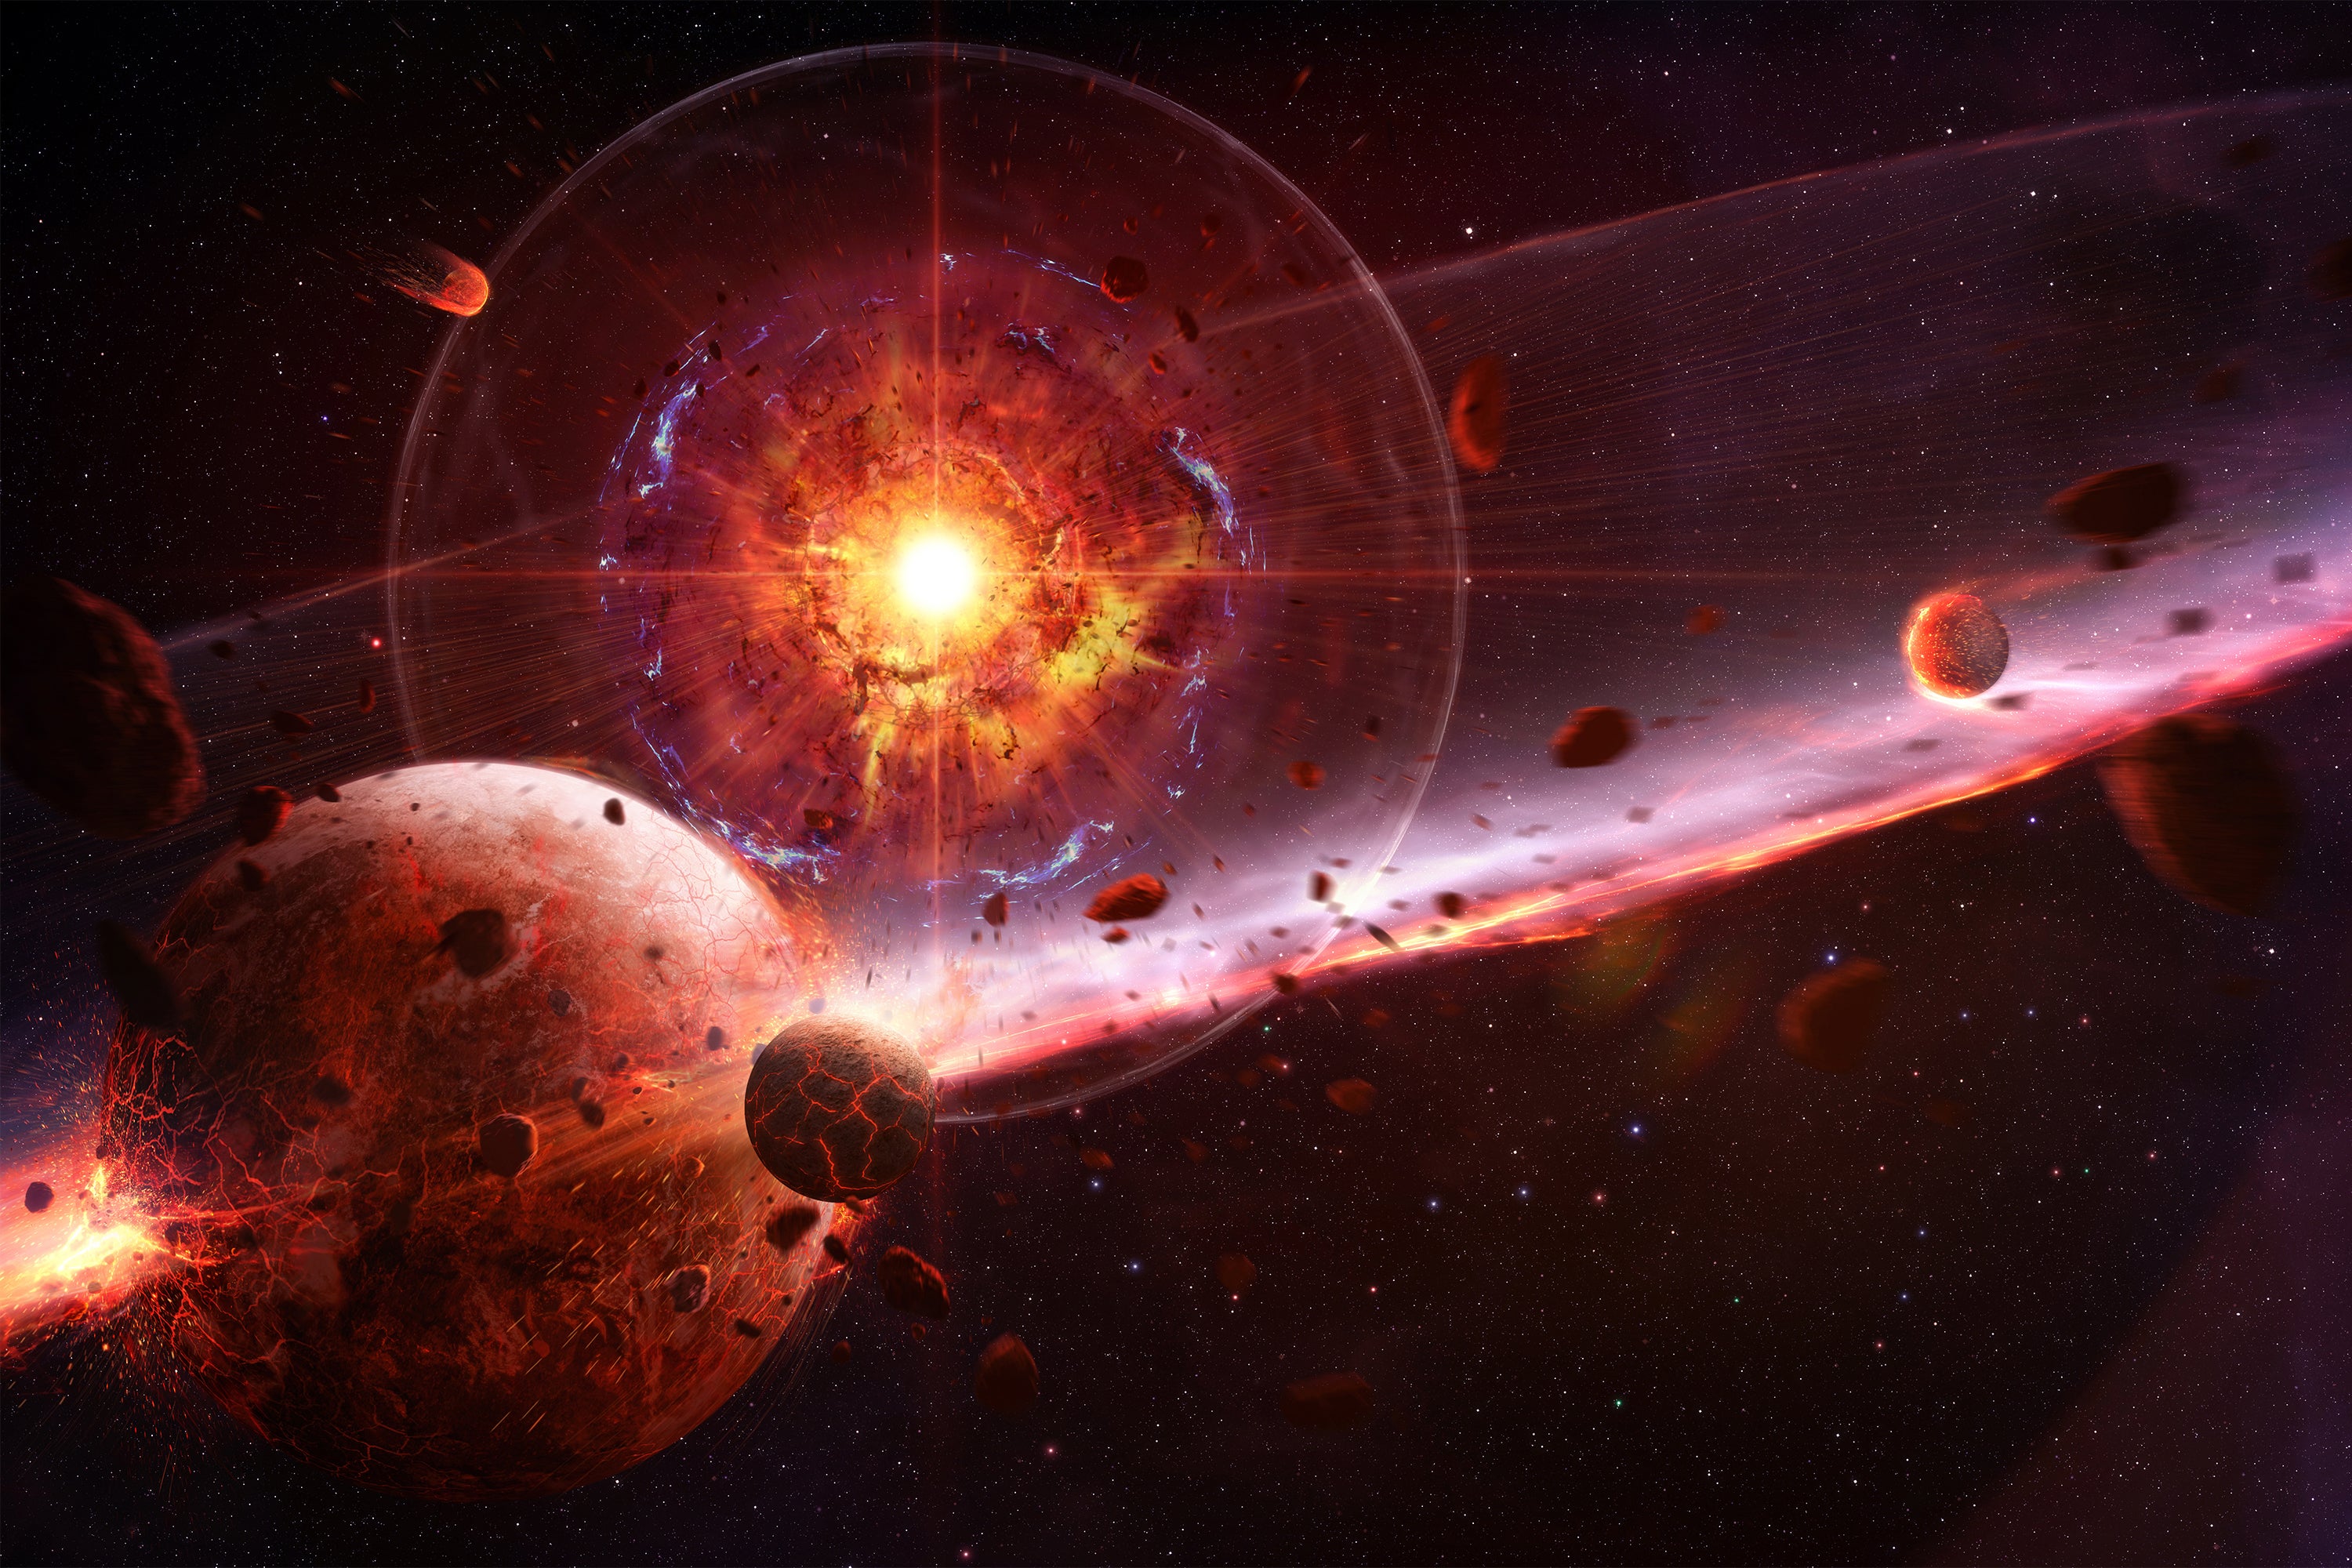 Illustration of a supernova explosion destroying planets